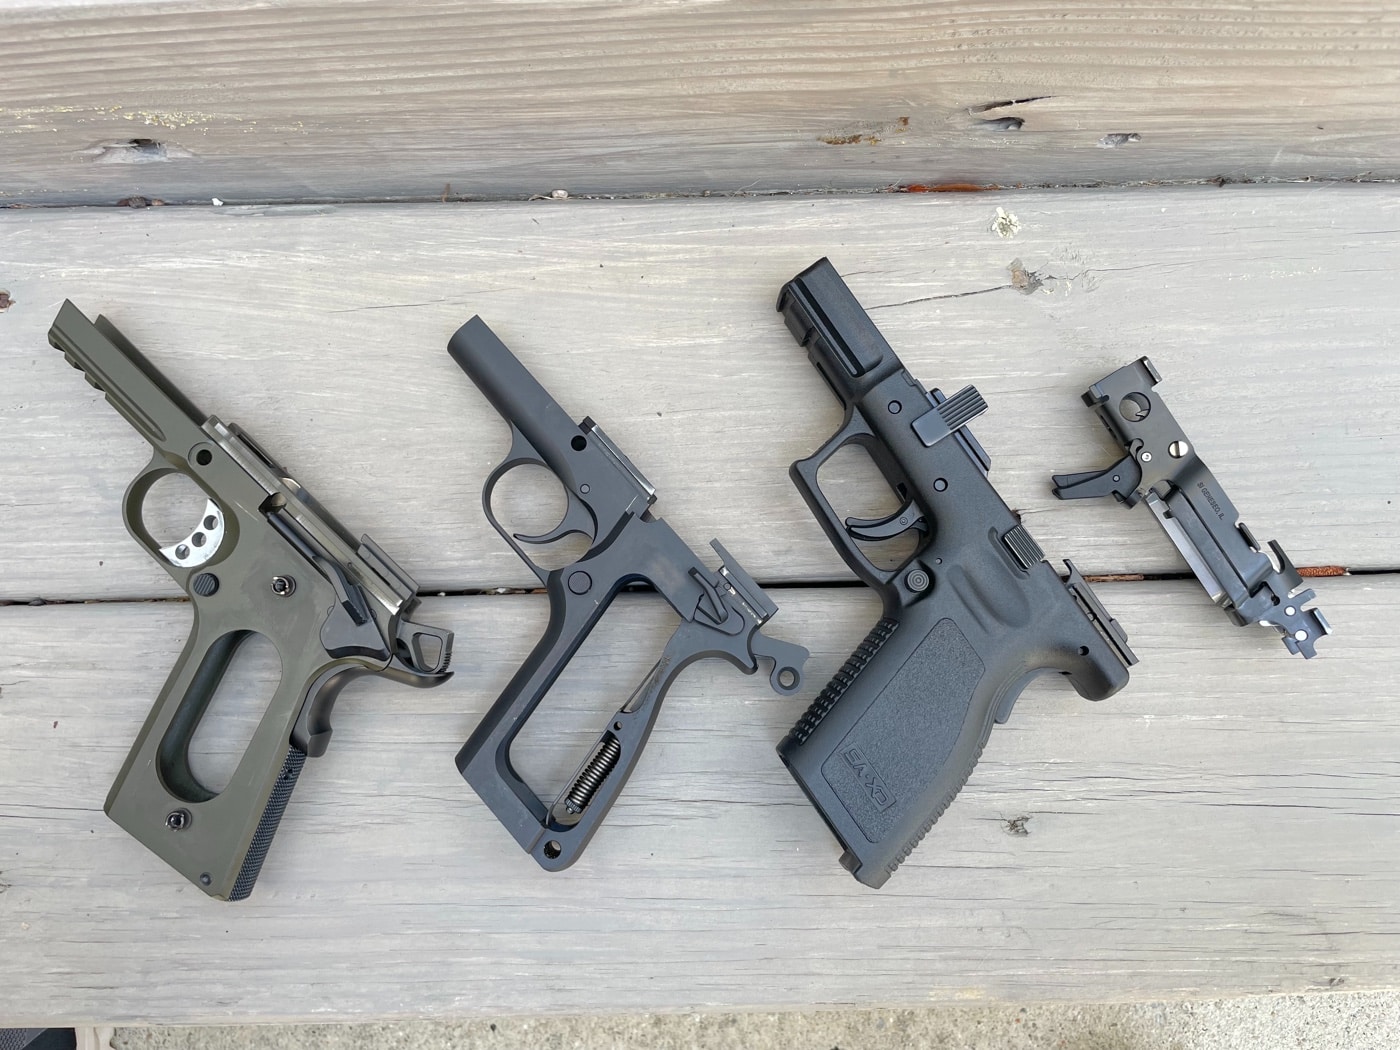 comparing frames of Springfield Armory handguns